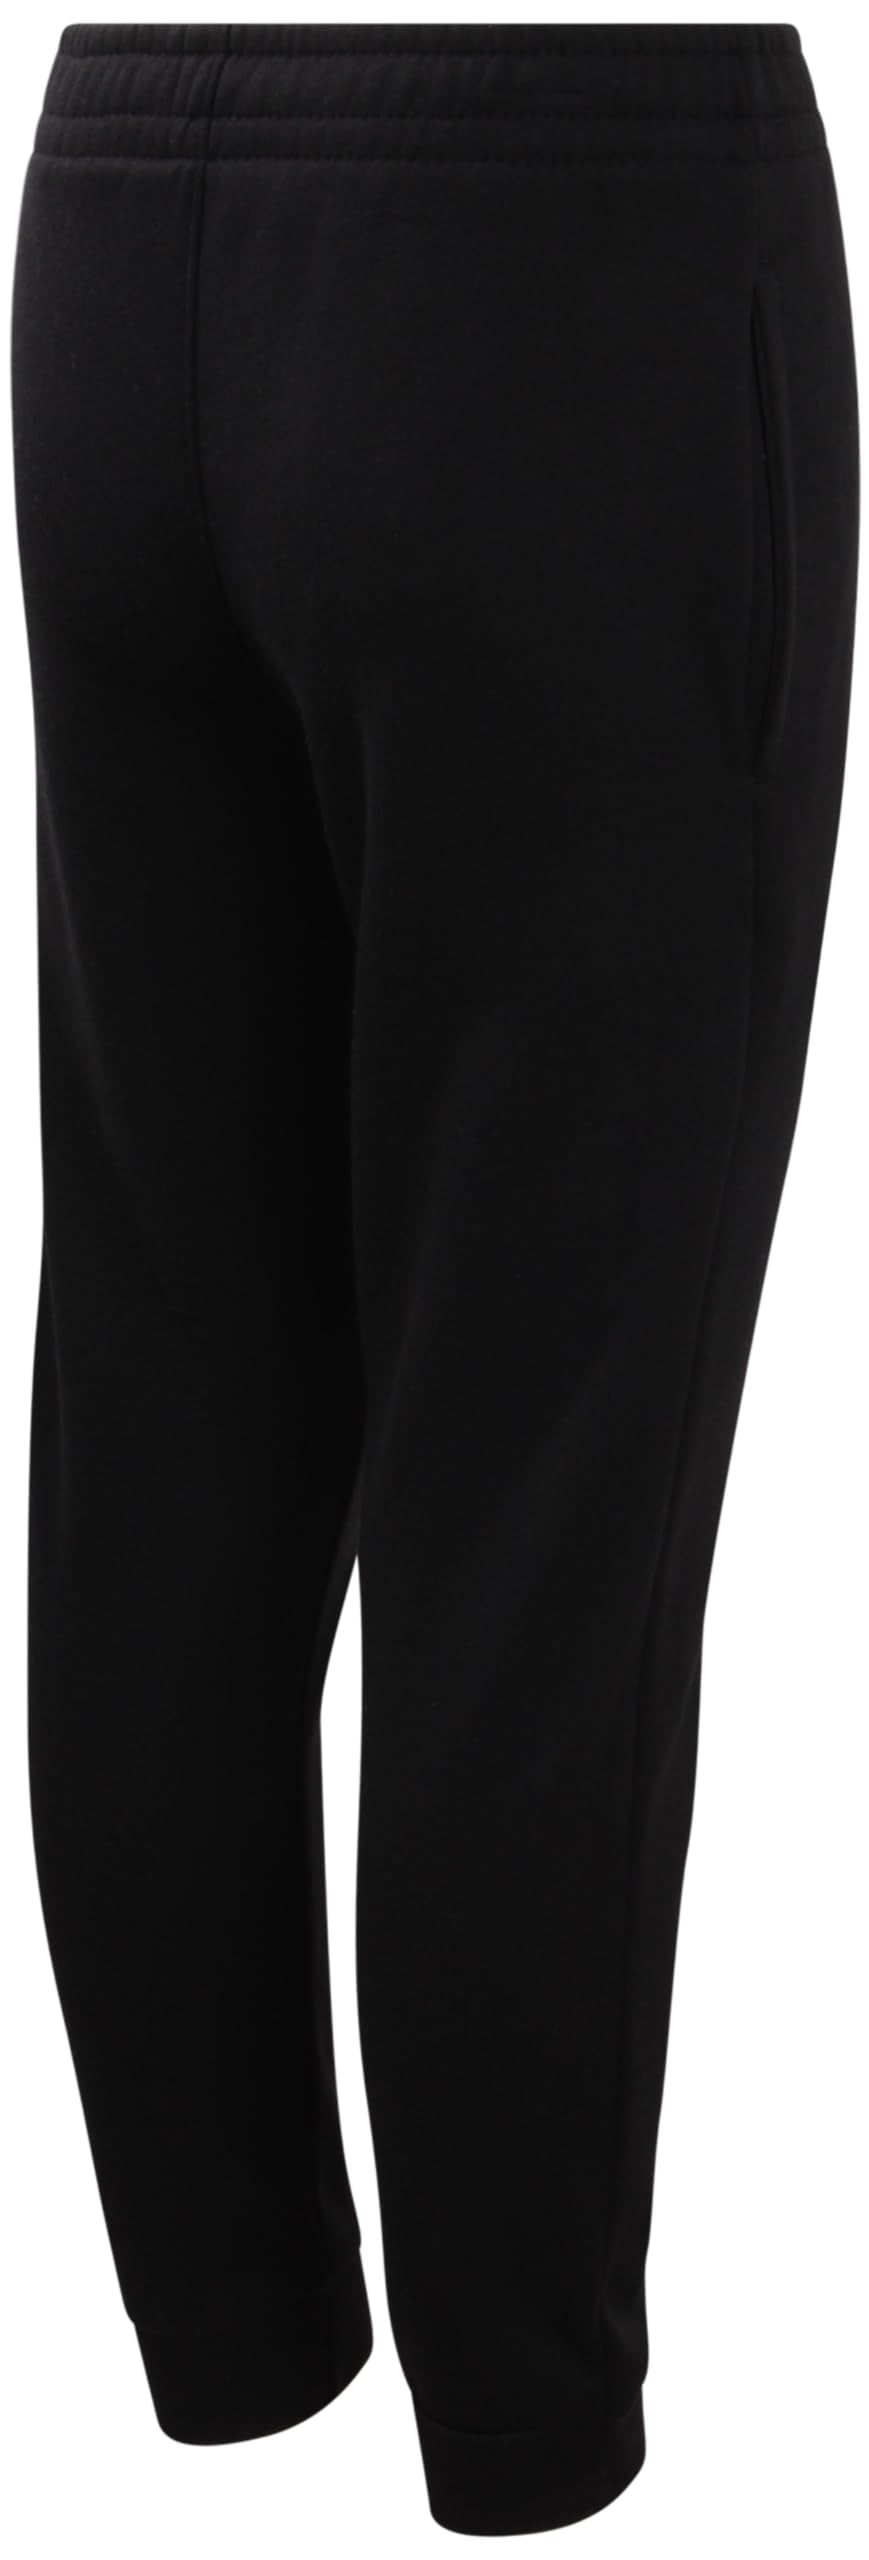 New Balance Boys' Sweatsuit Set - 2 Piece Fleece Pullover Hoodie Sweatshirt and Sweatpants (8-12), Size 12, Bright White Black